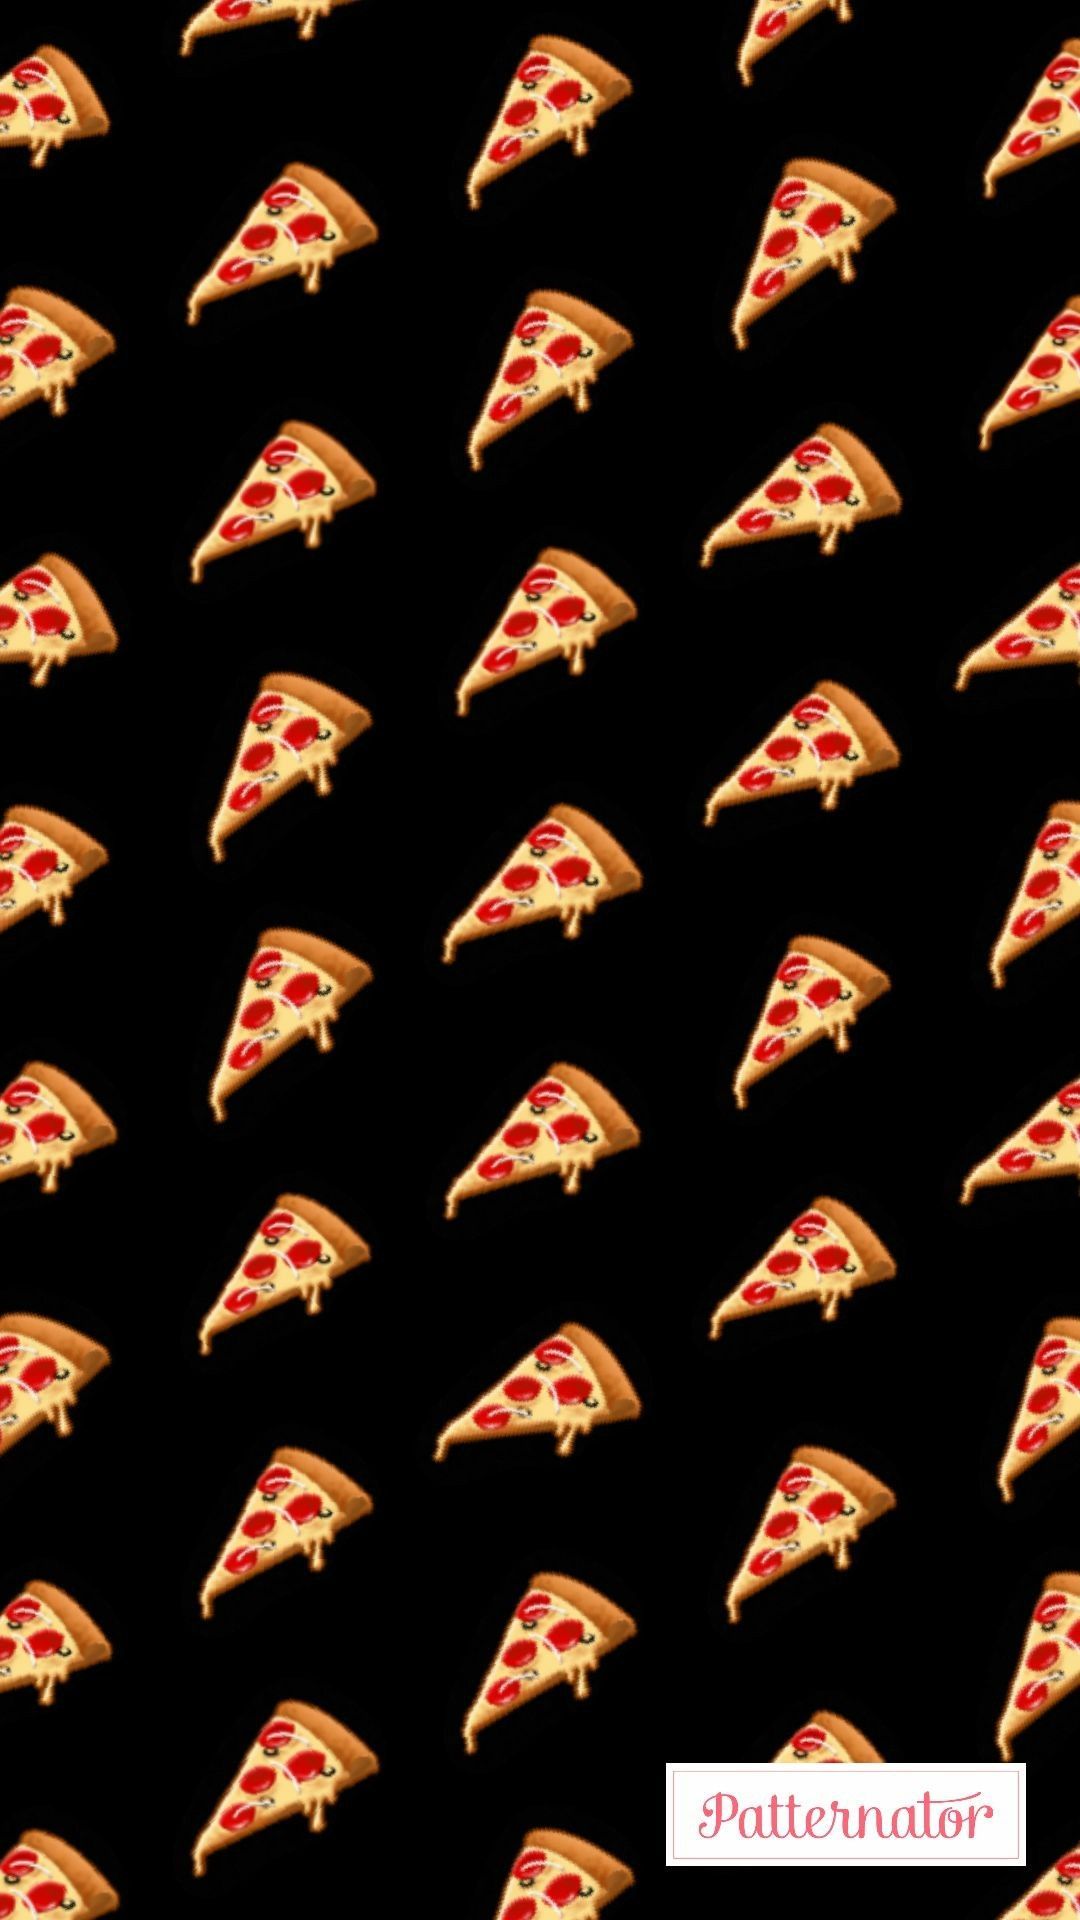 A pizza pattern on a black background - Pizza